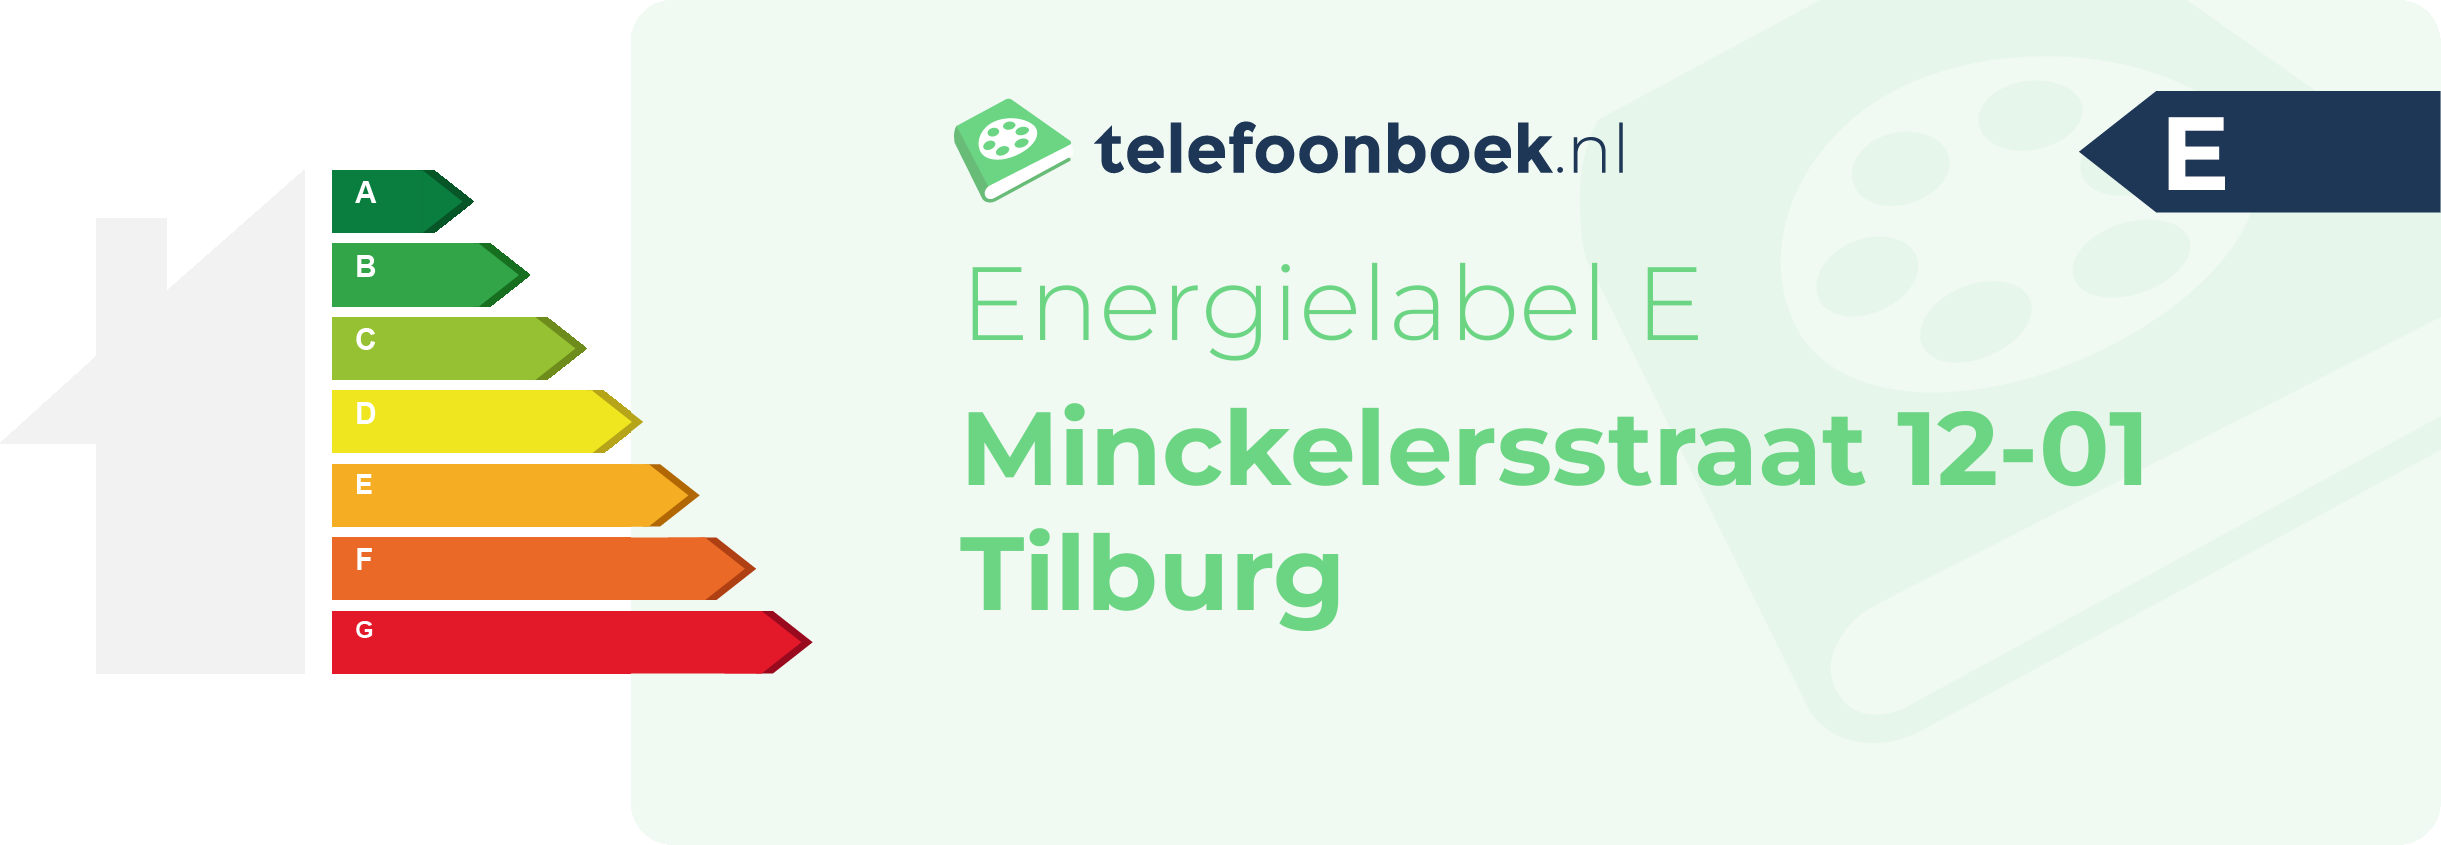 Energielabel Minckelersstraat 12-01 Tilburg